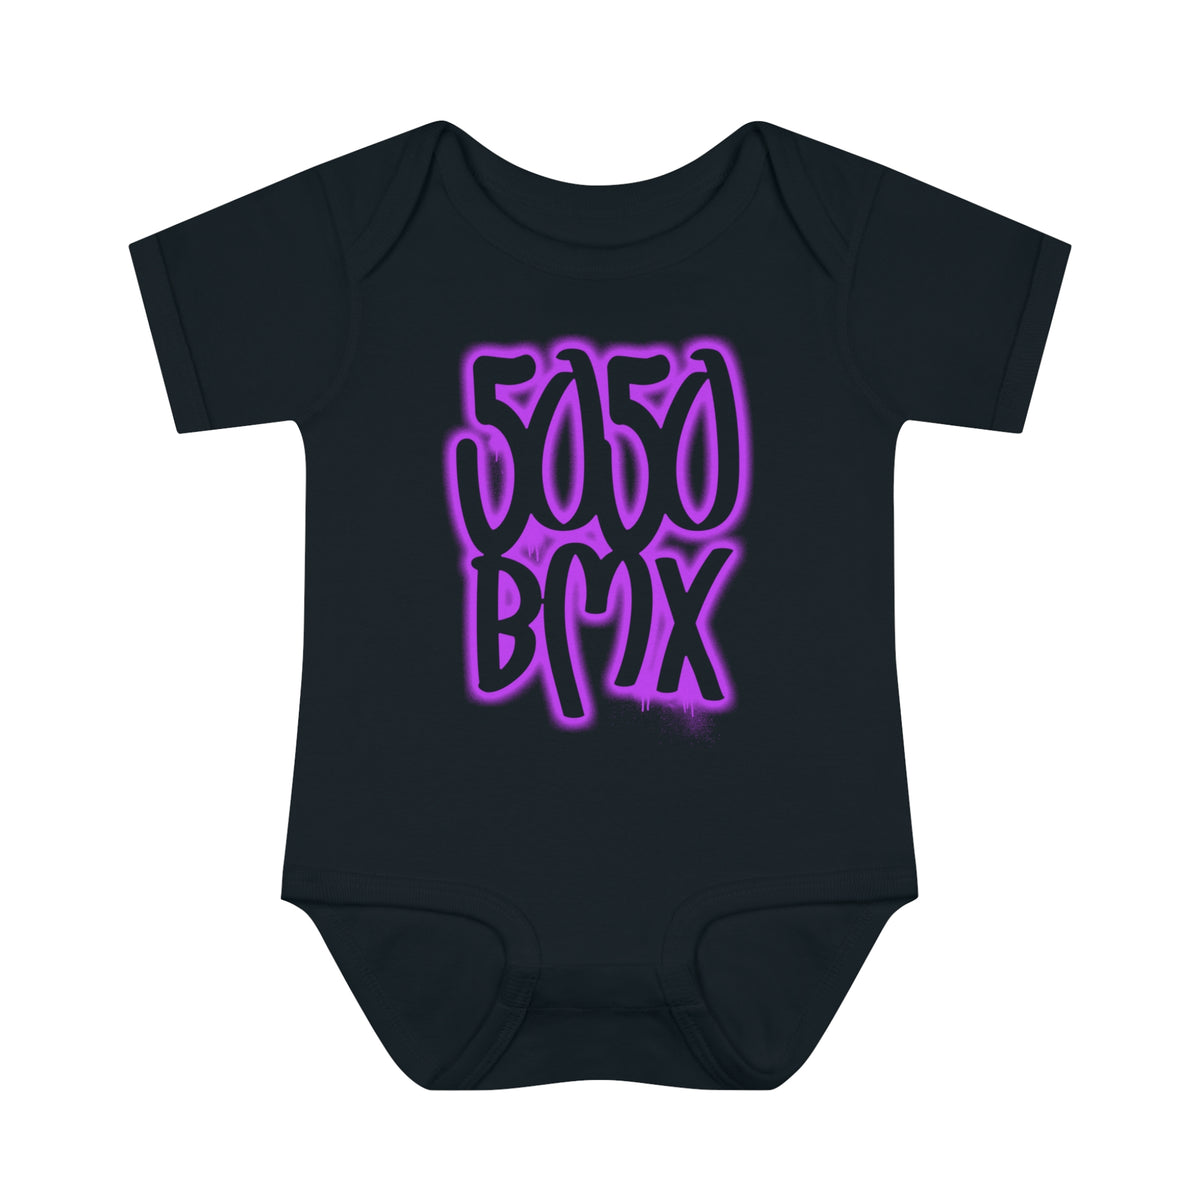 5050bmx Graffiti Infant Baby Onesie (Purple)